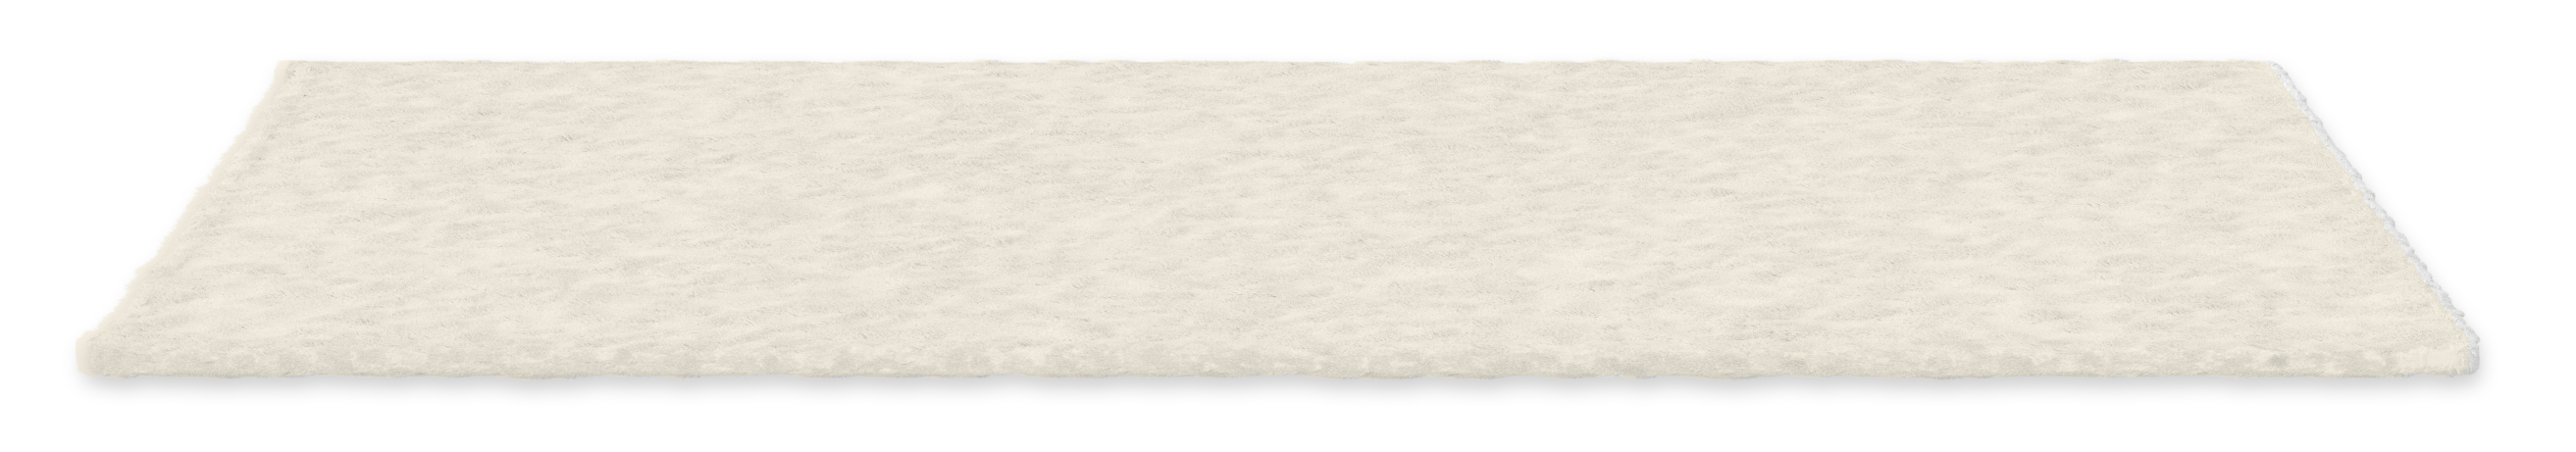 Bottom Wool Insulator Pad